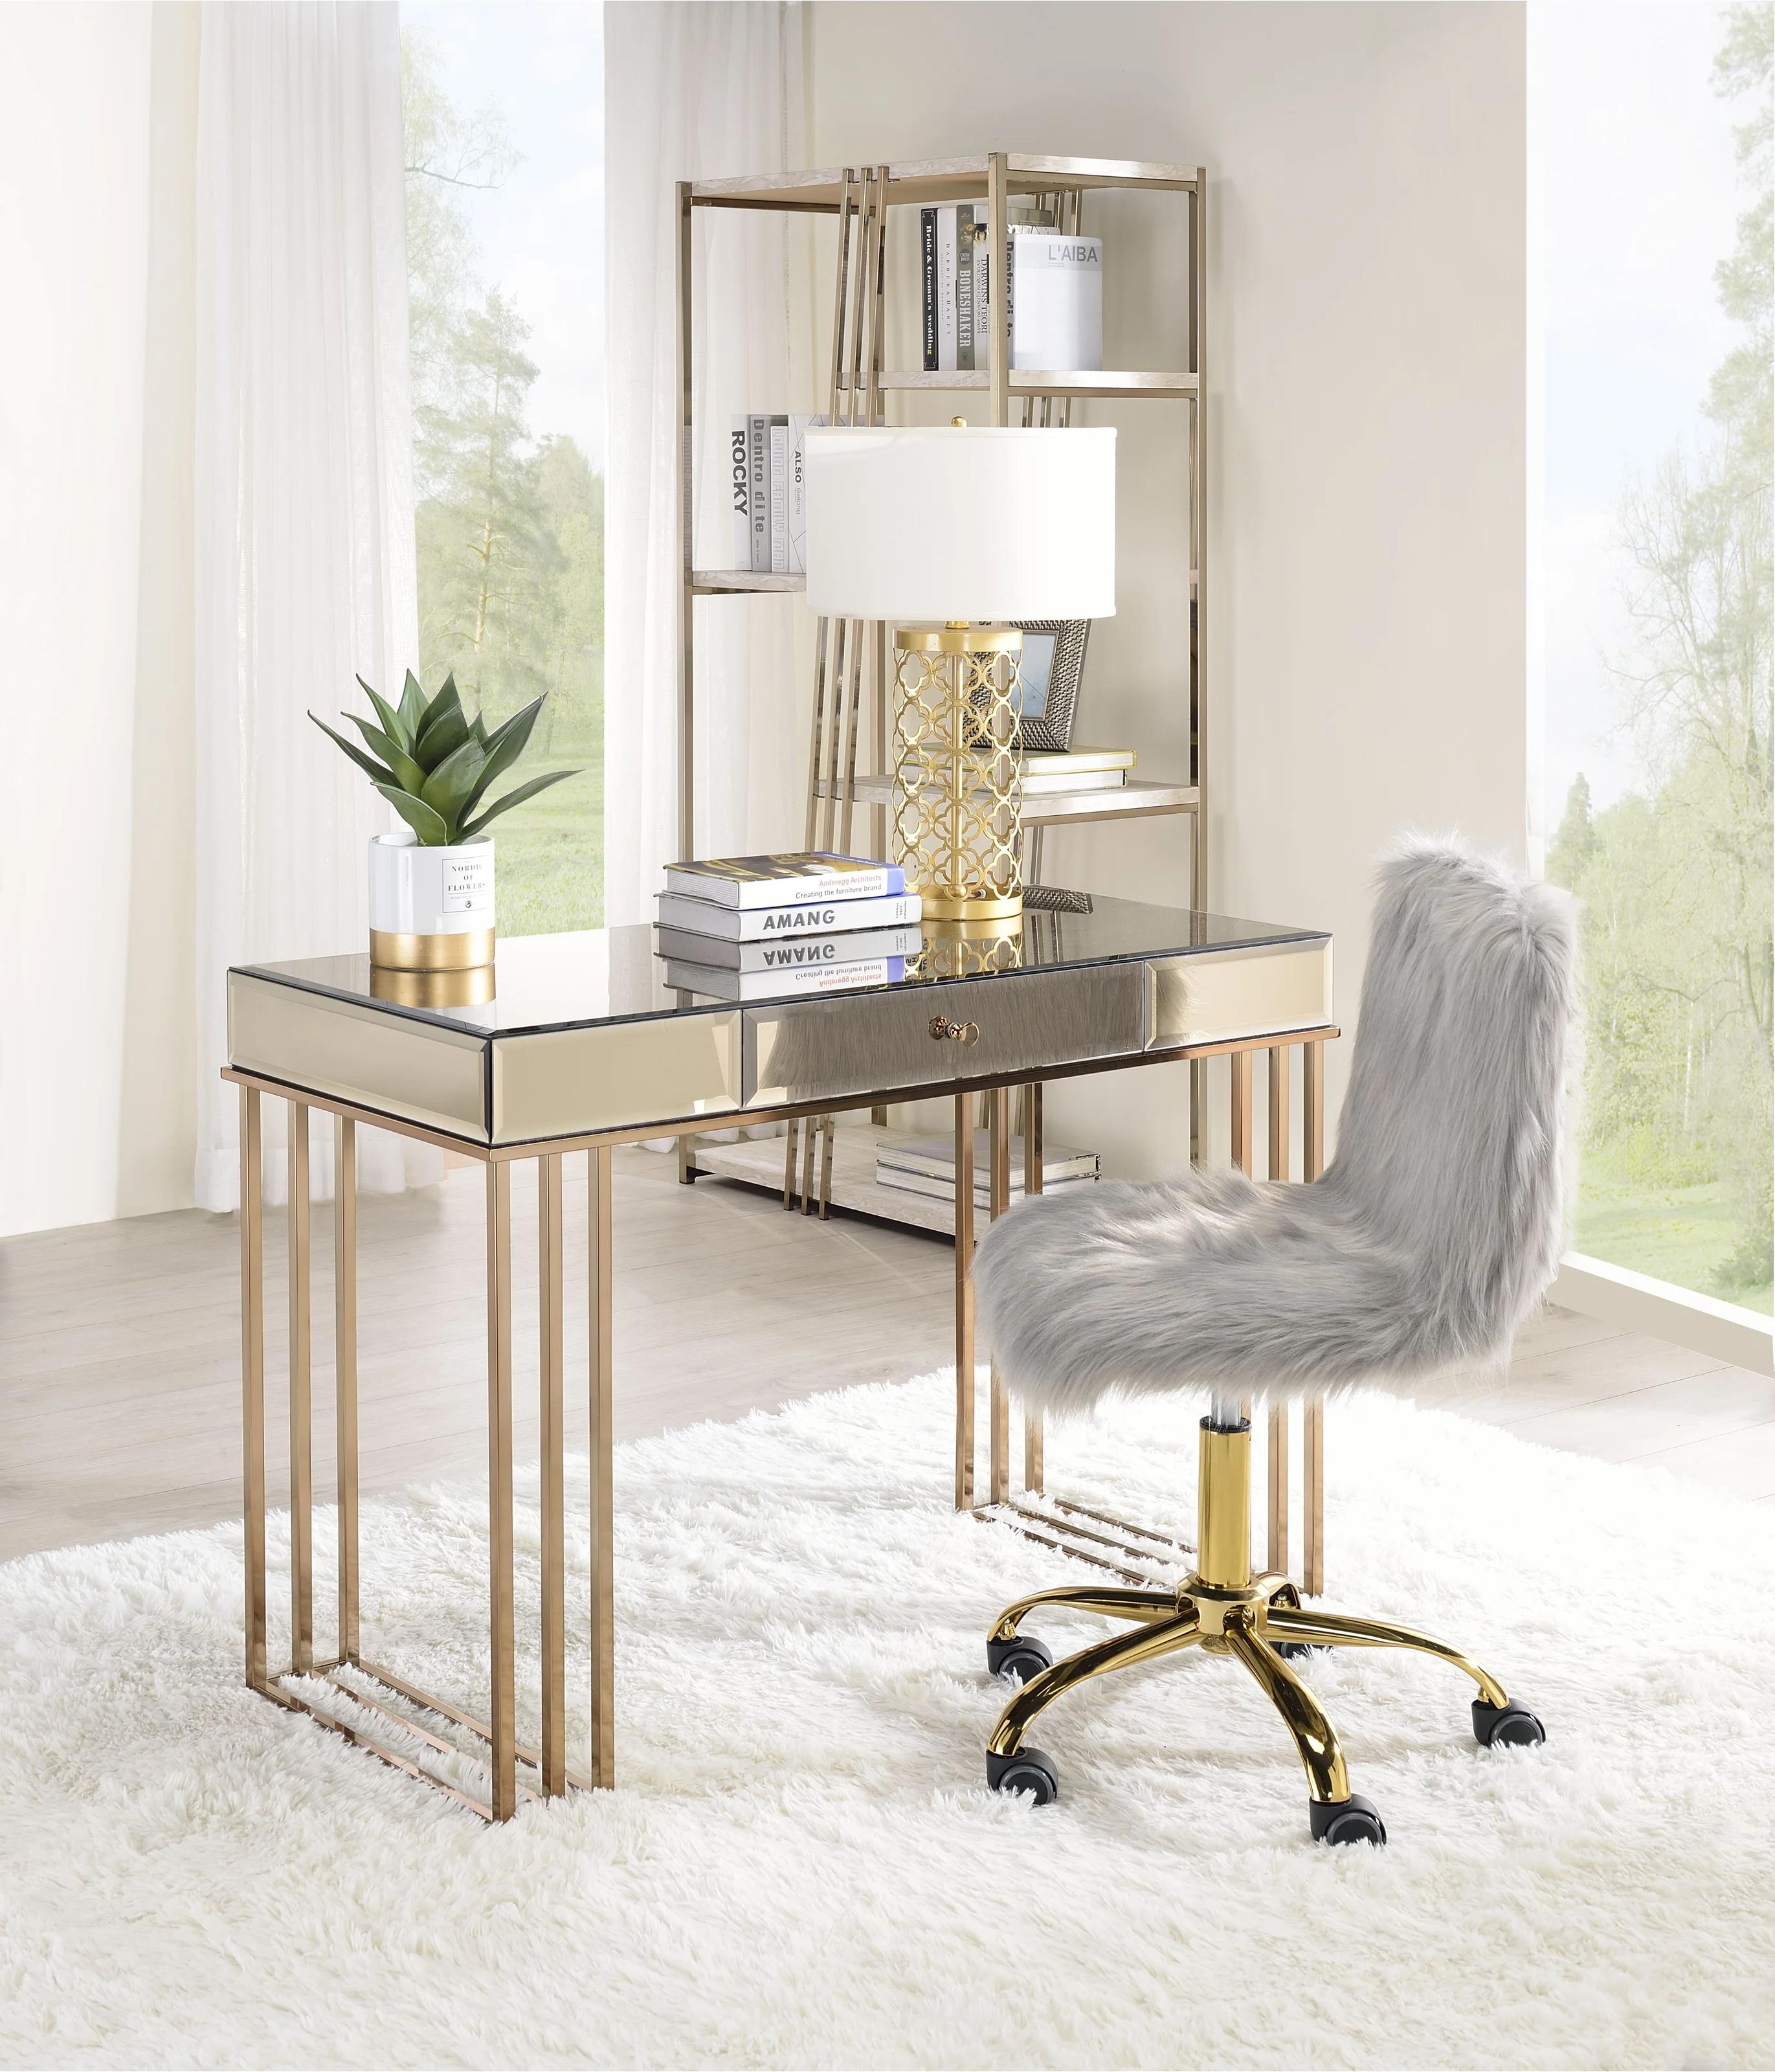 

    
Modern Smoky Mirrored & Champagne Writing Desk + Bookshelf + Chair by Acme Critter 92981-3pcs
